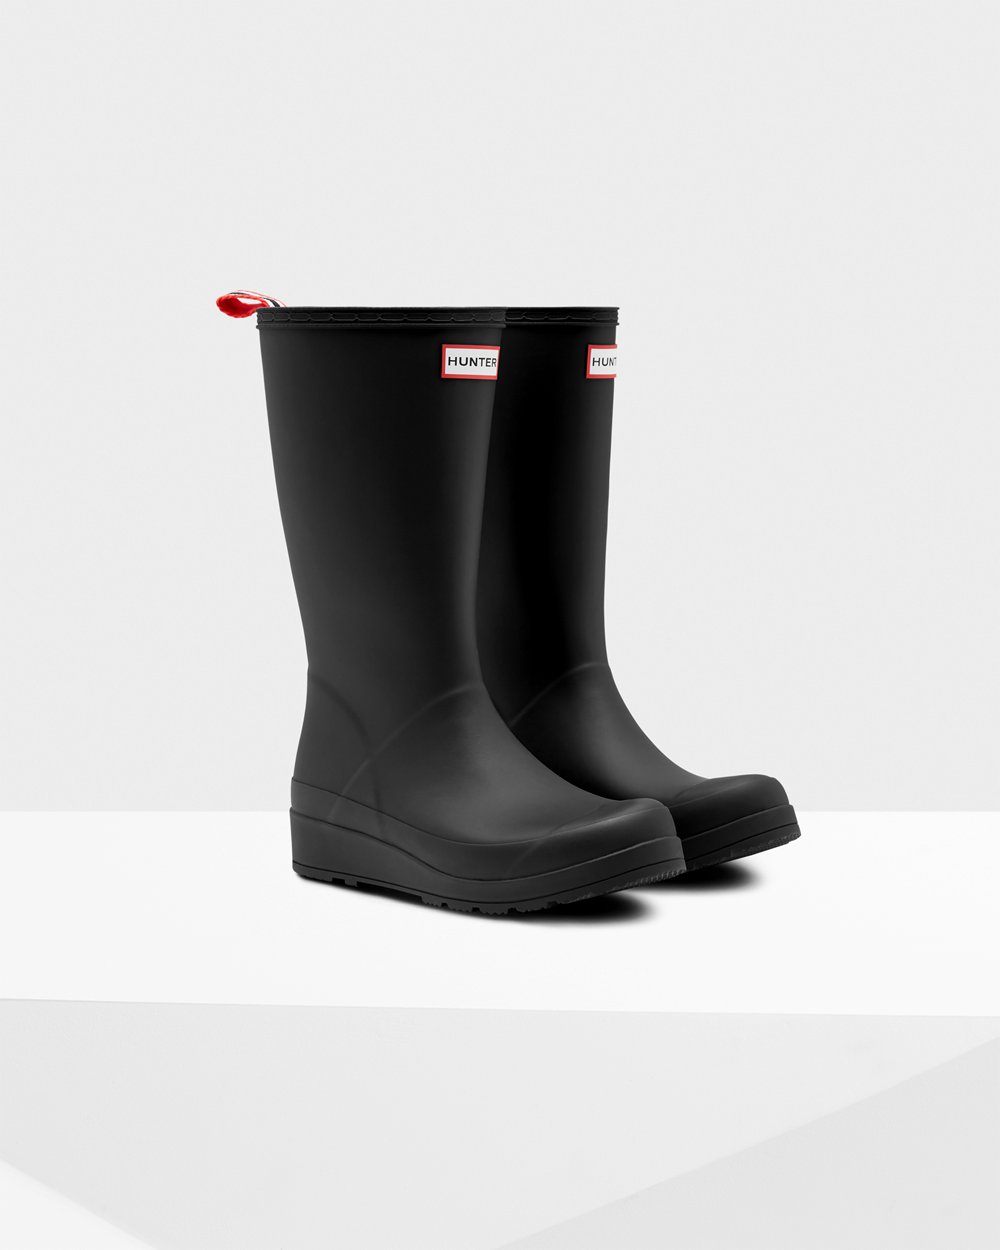 Womens Play Boots - Hunter Original Tall Rain (26RTDQHAX) - Black